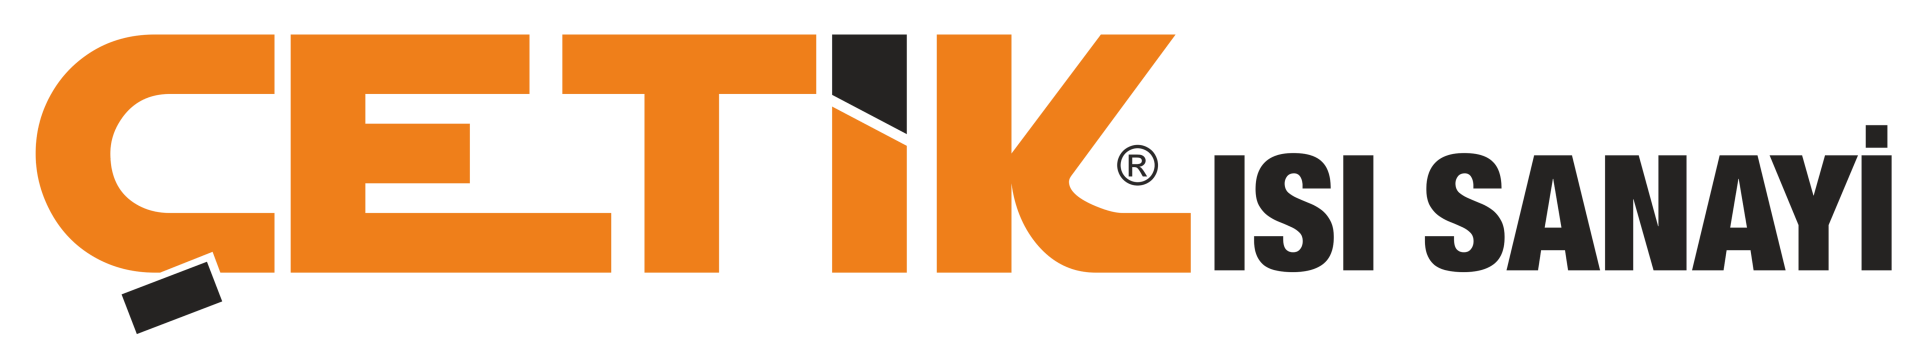 Çetik Logo